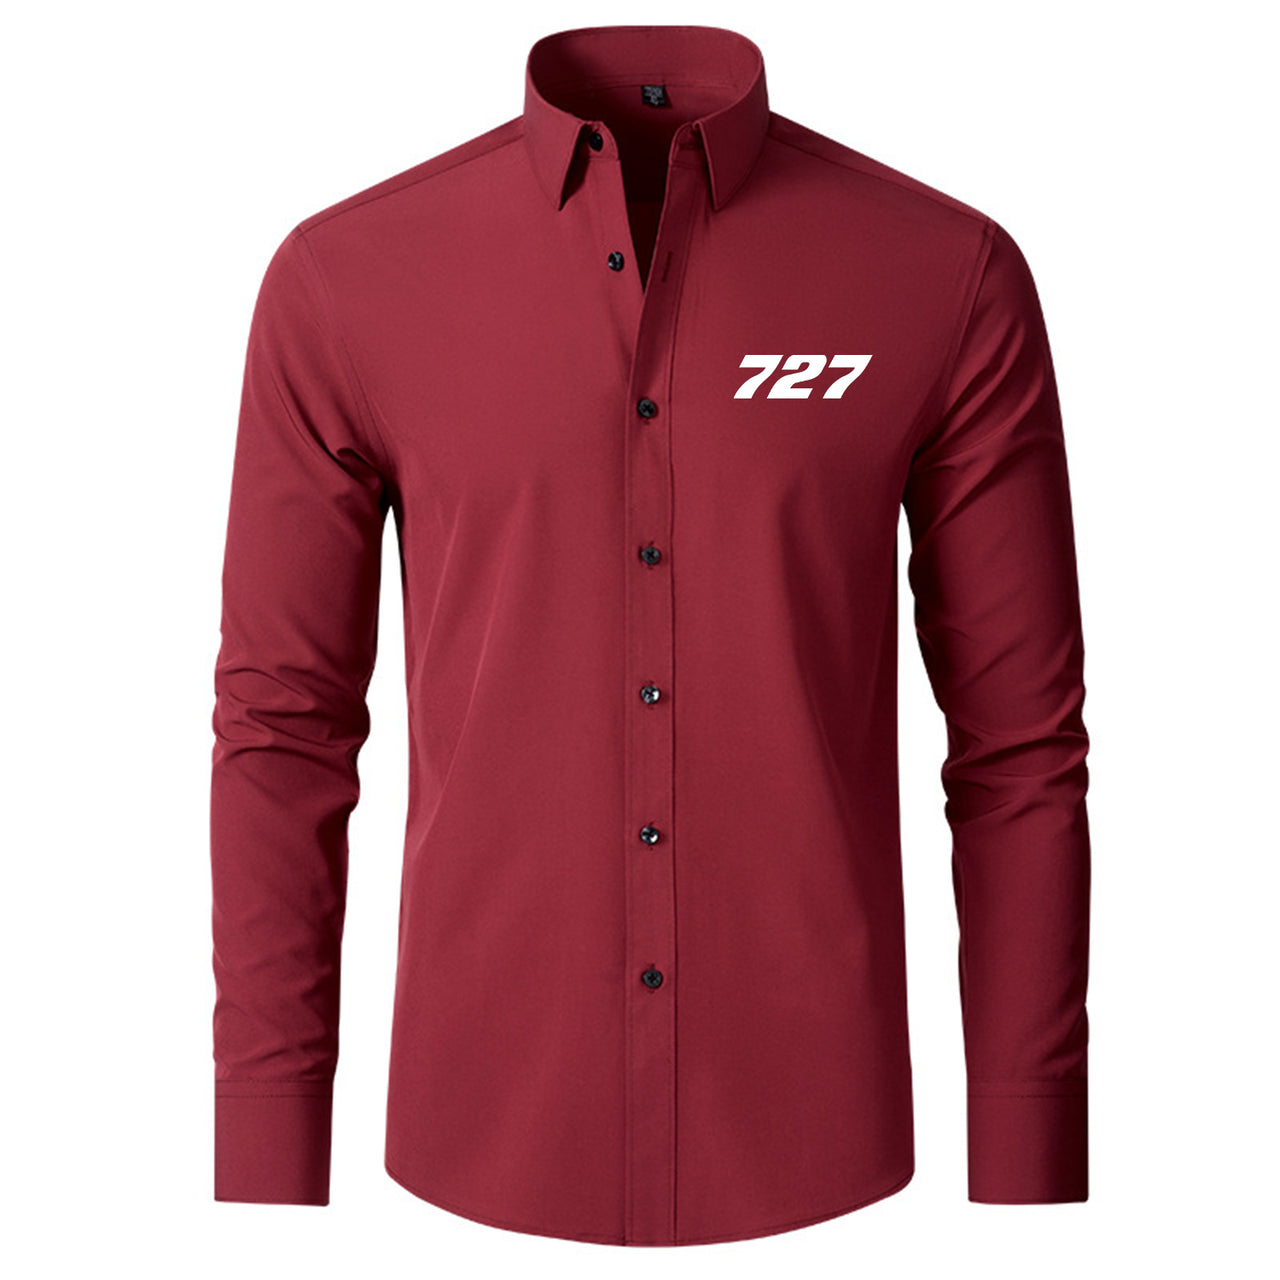 727 Flat Text Designed Long Sleeve Shirts